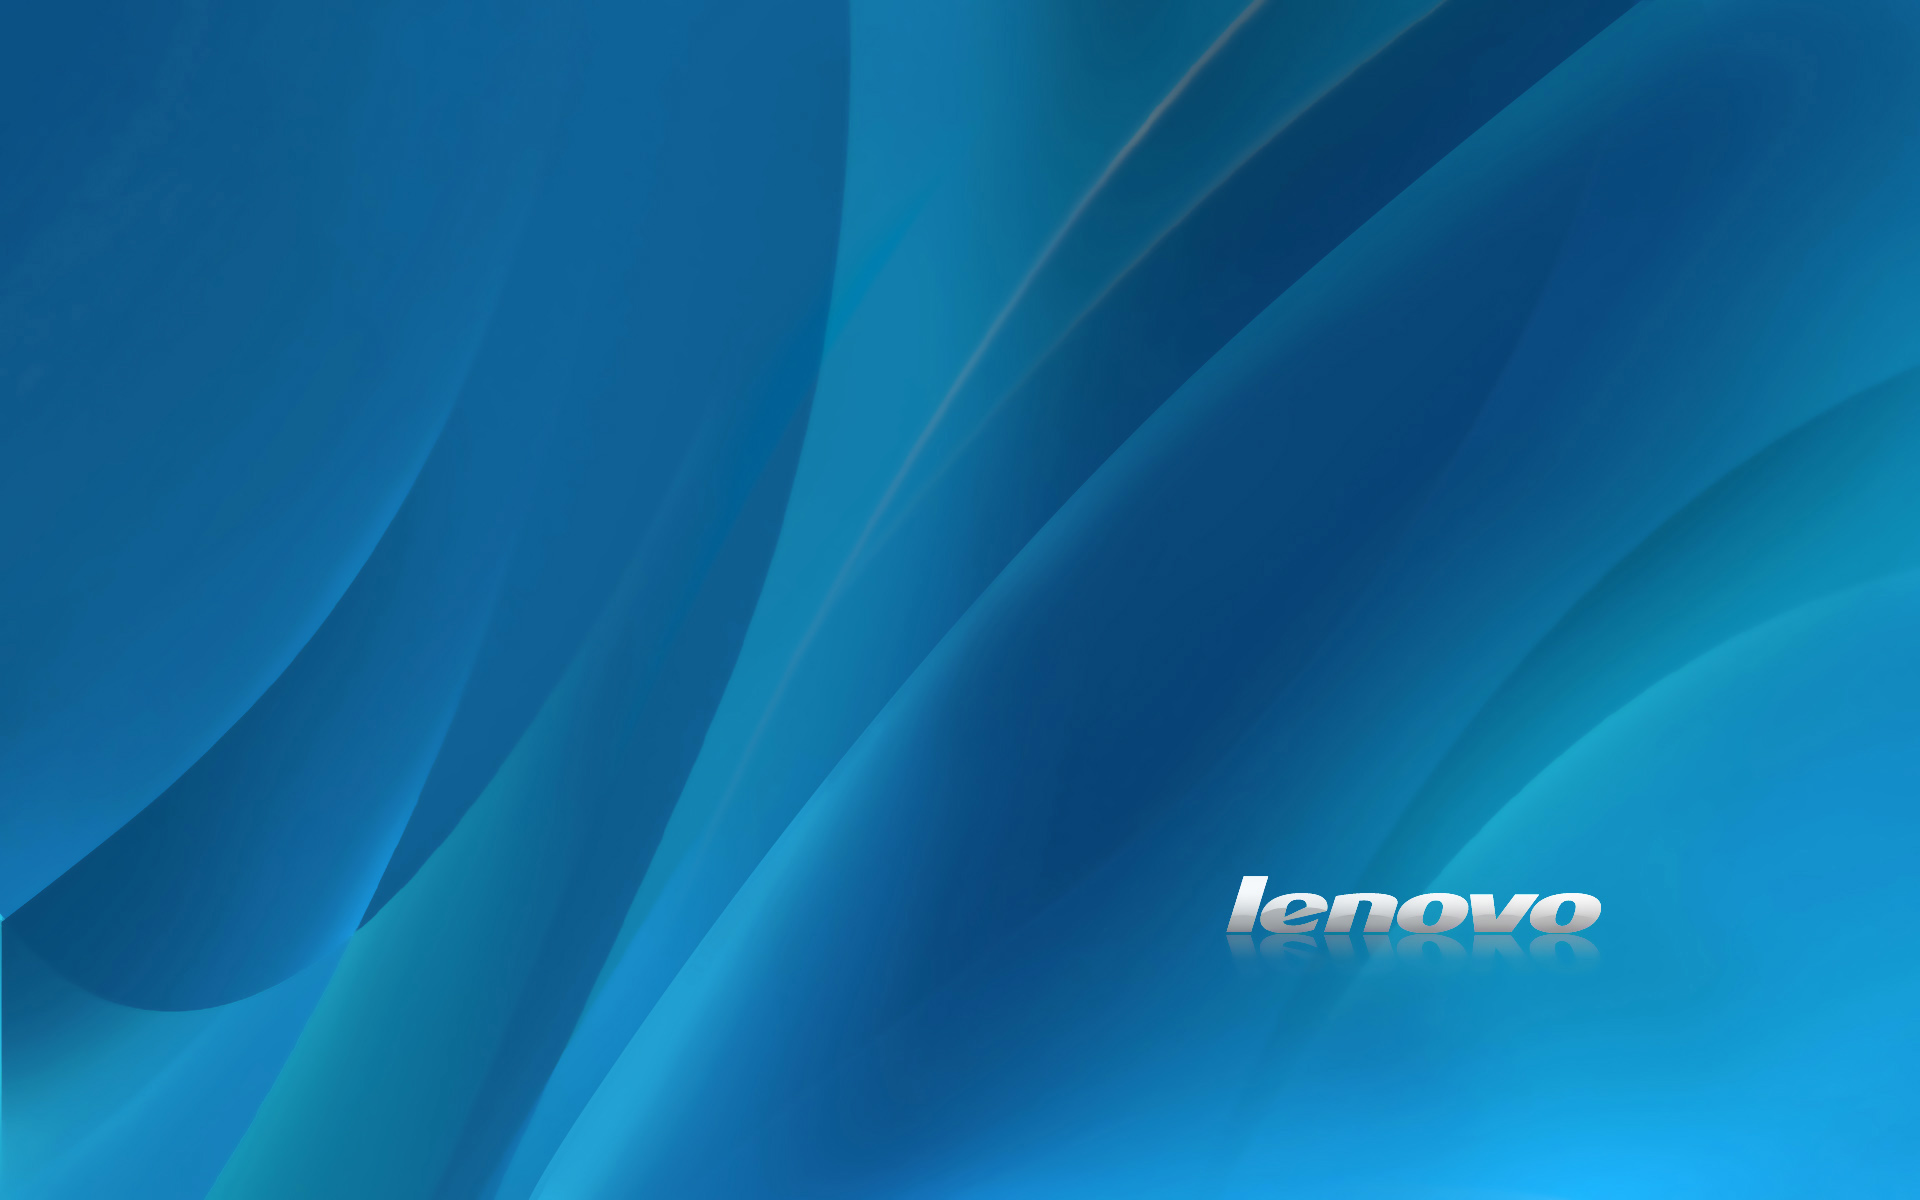 lenovo wallpaper,blau,aqua,türkis,elektrisches blau,betriebssystem